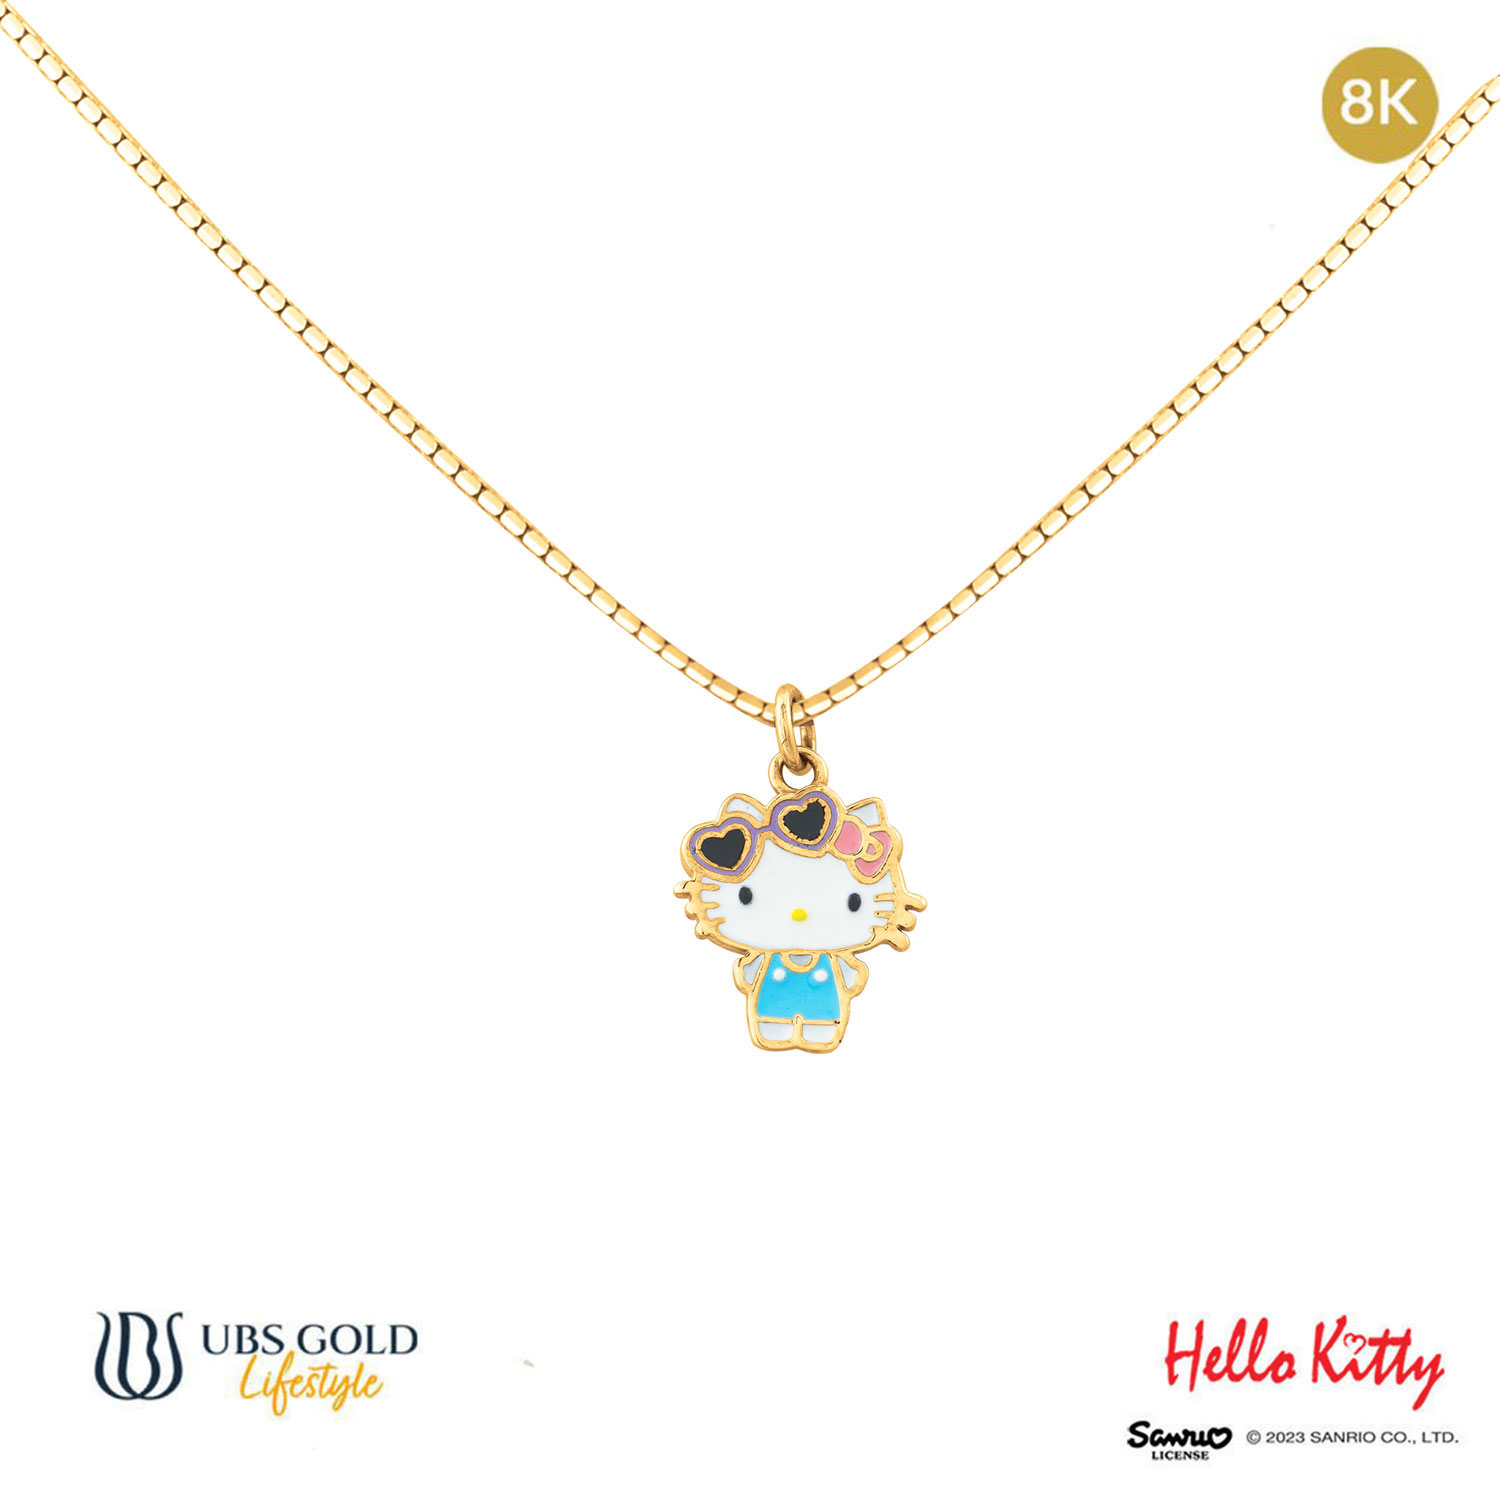 UBS Gold Kalung Emas Anak Sanrio Hello Kitty - Kkz0101K - 8K